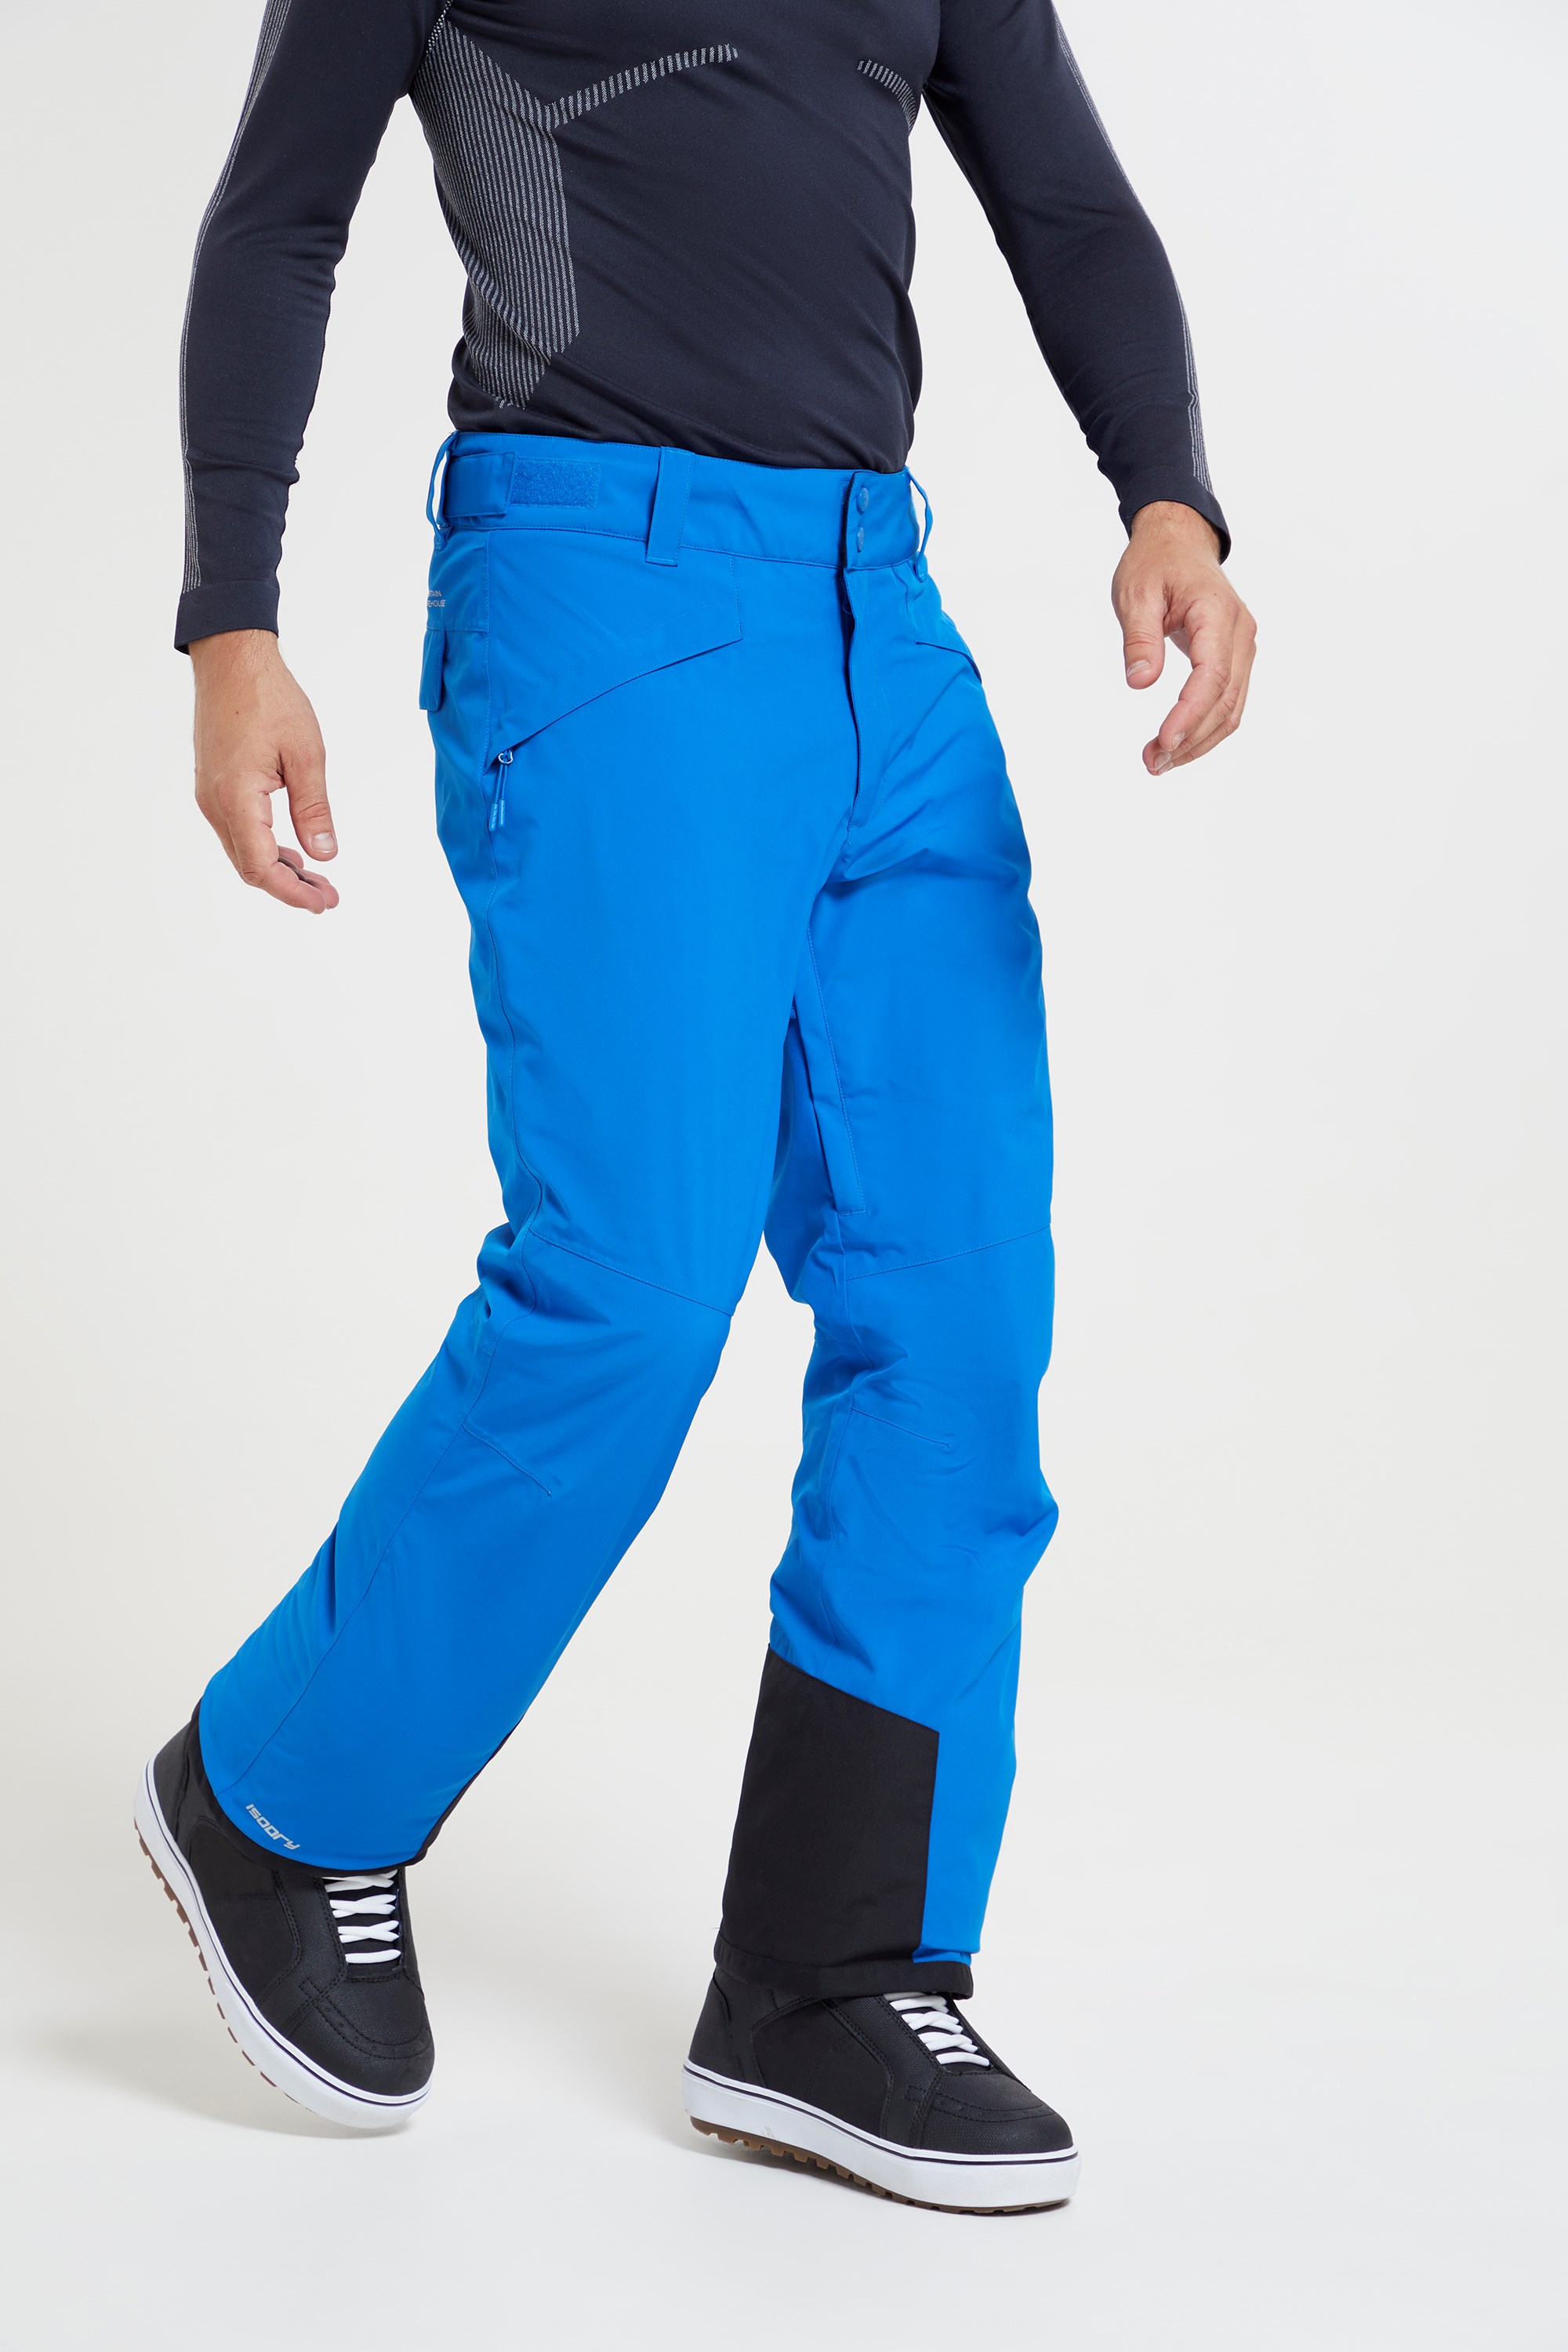 Fordal - Men's ski pants